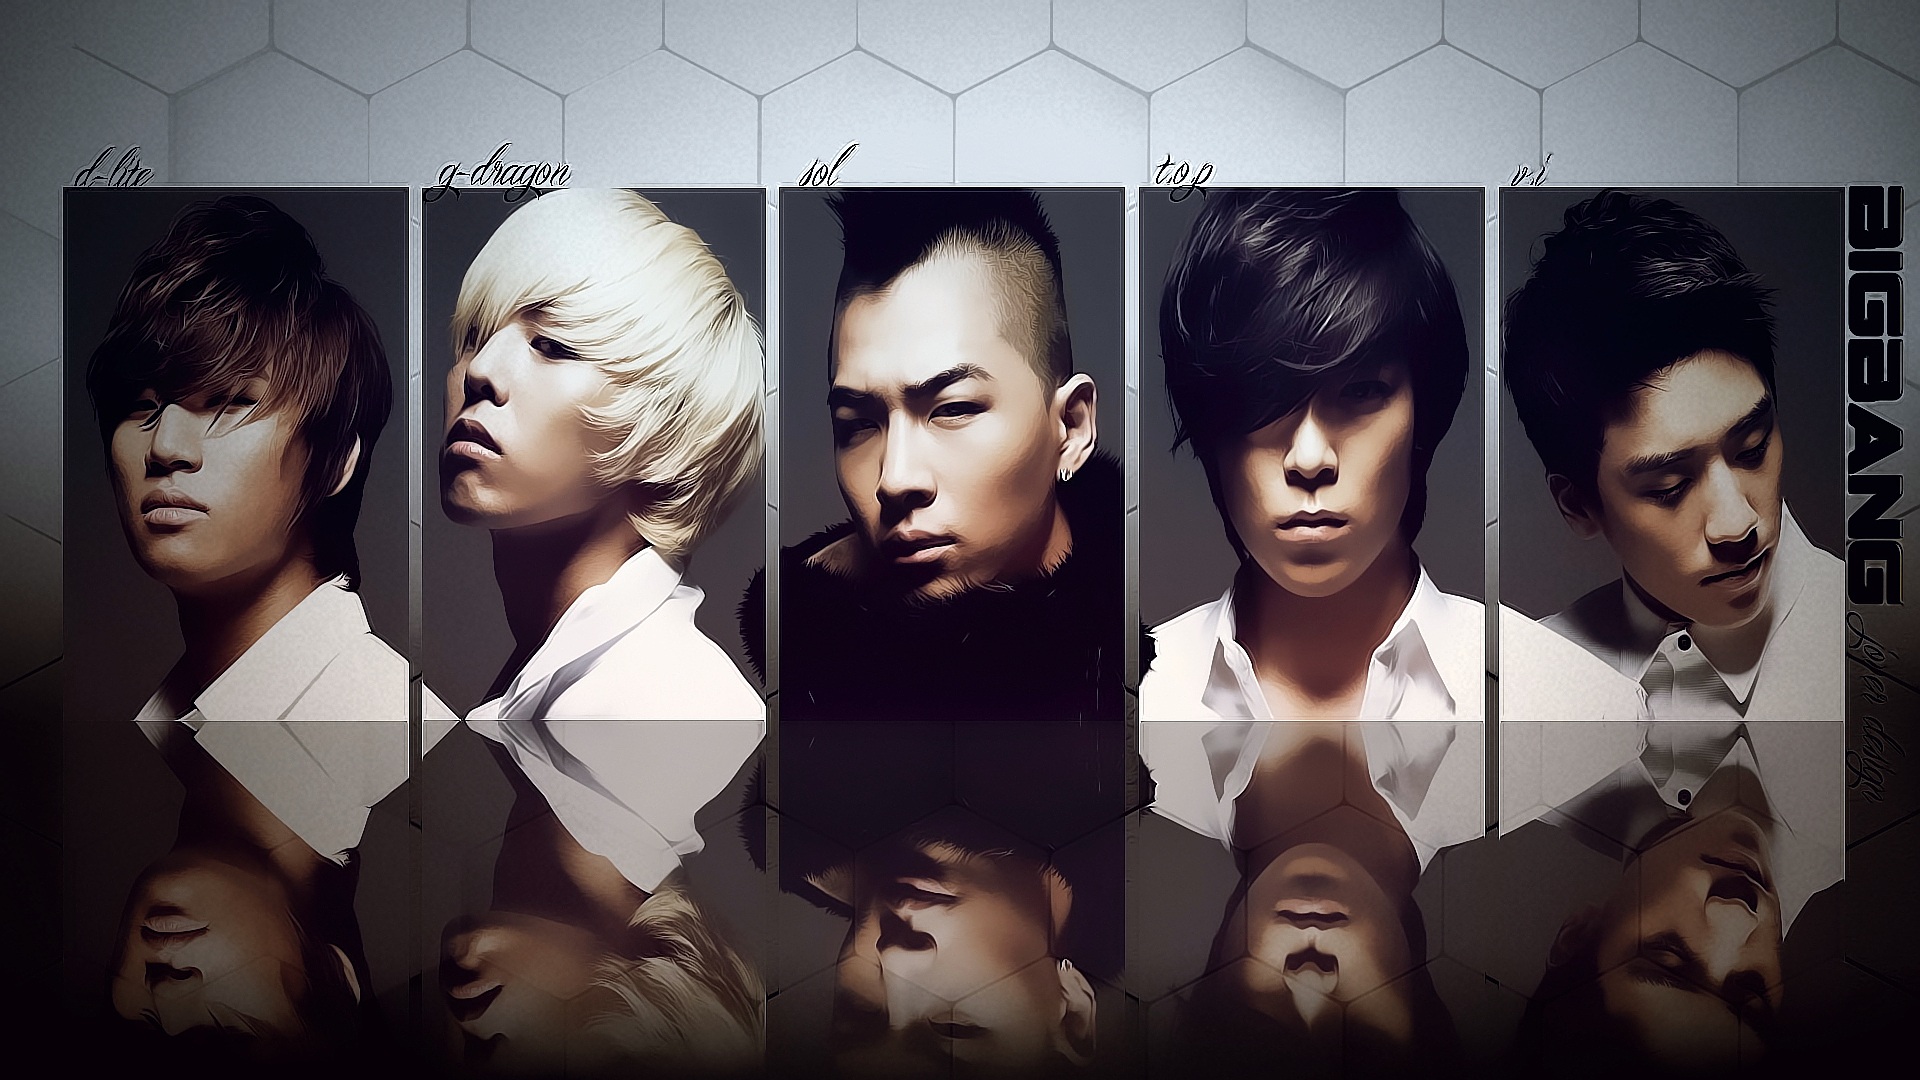 G Dragon Bigbang Hip Hop K Pop Korean Kpop Pop 91 Wallpapers Hd Desktop And Mobile Backgrounds